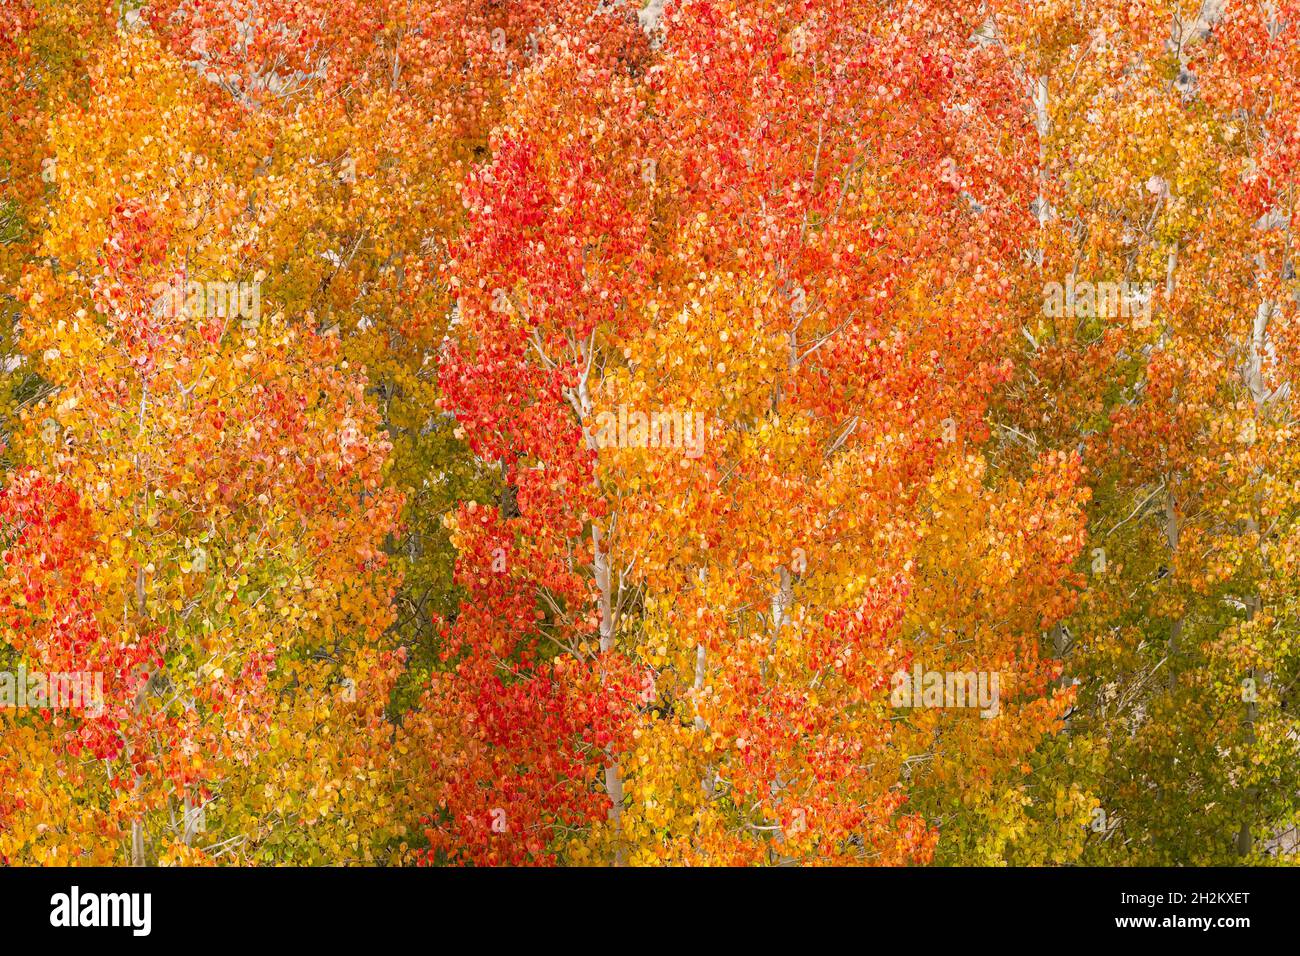 Fall colors protected in desert ravines near Mono Lake at sunrise. Stock Photo